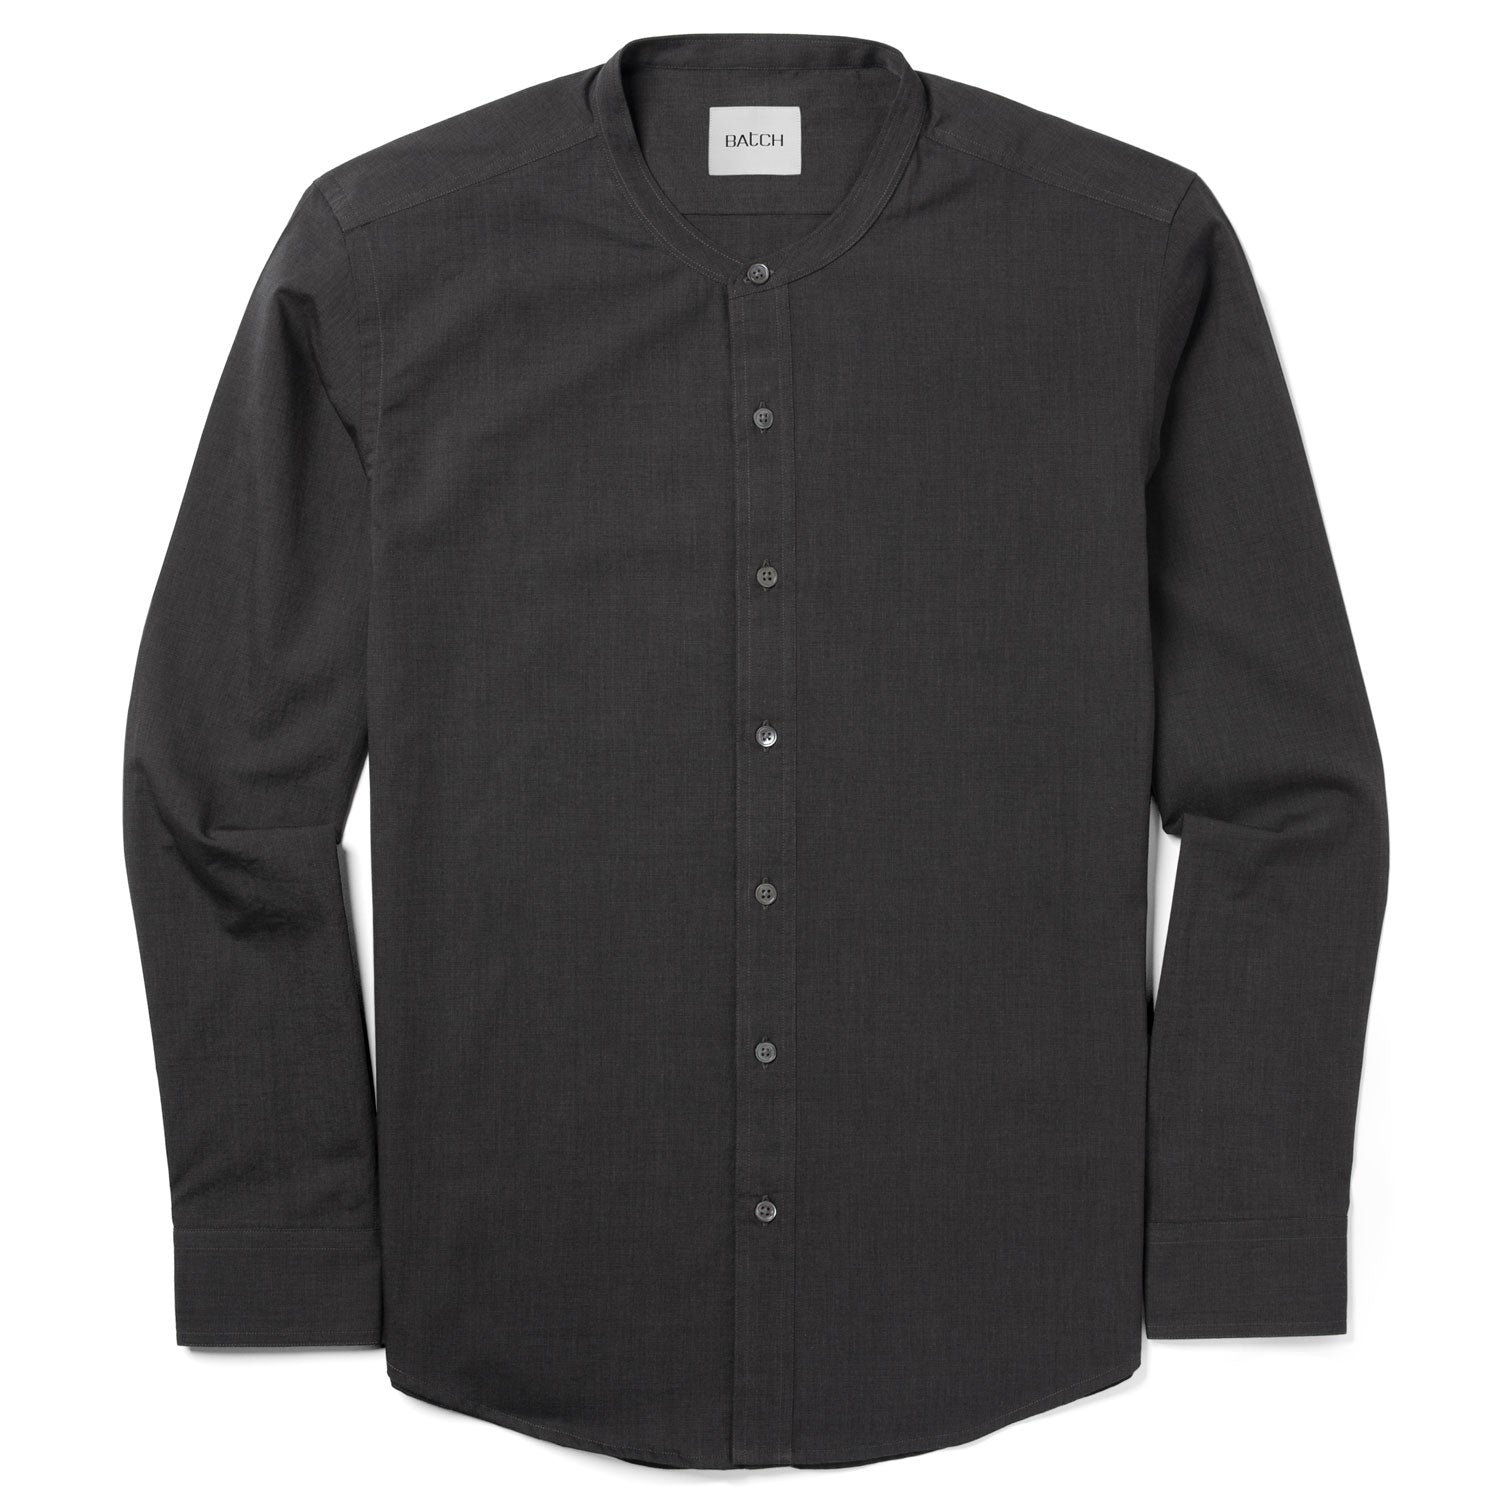 Essential Band Collar Button Down Shirt - Asphalt Gray Cotton End-on-end